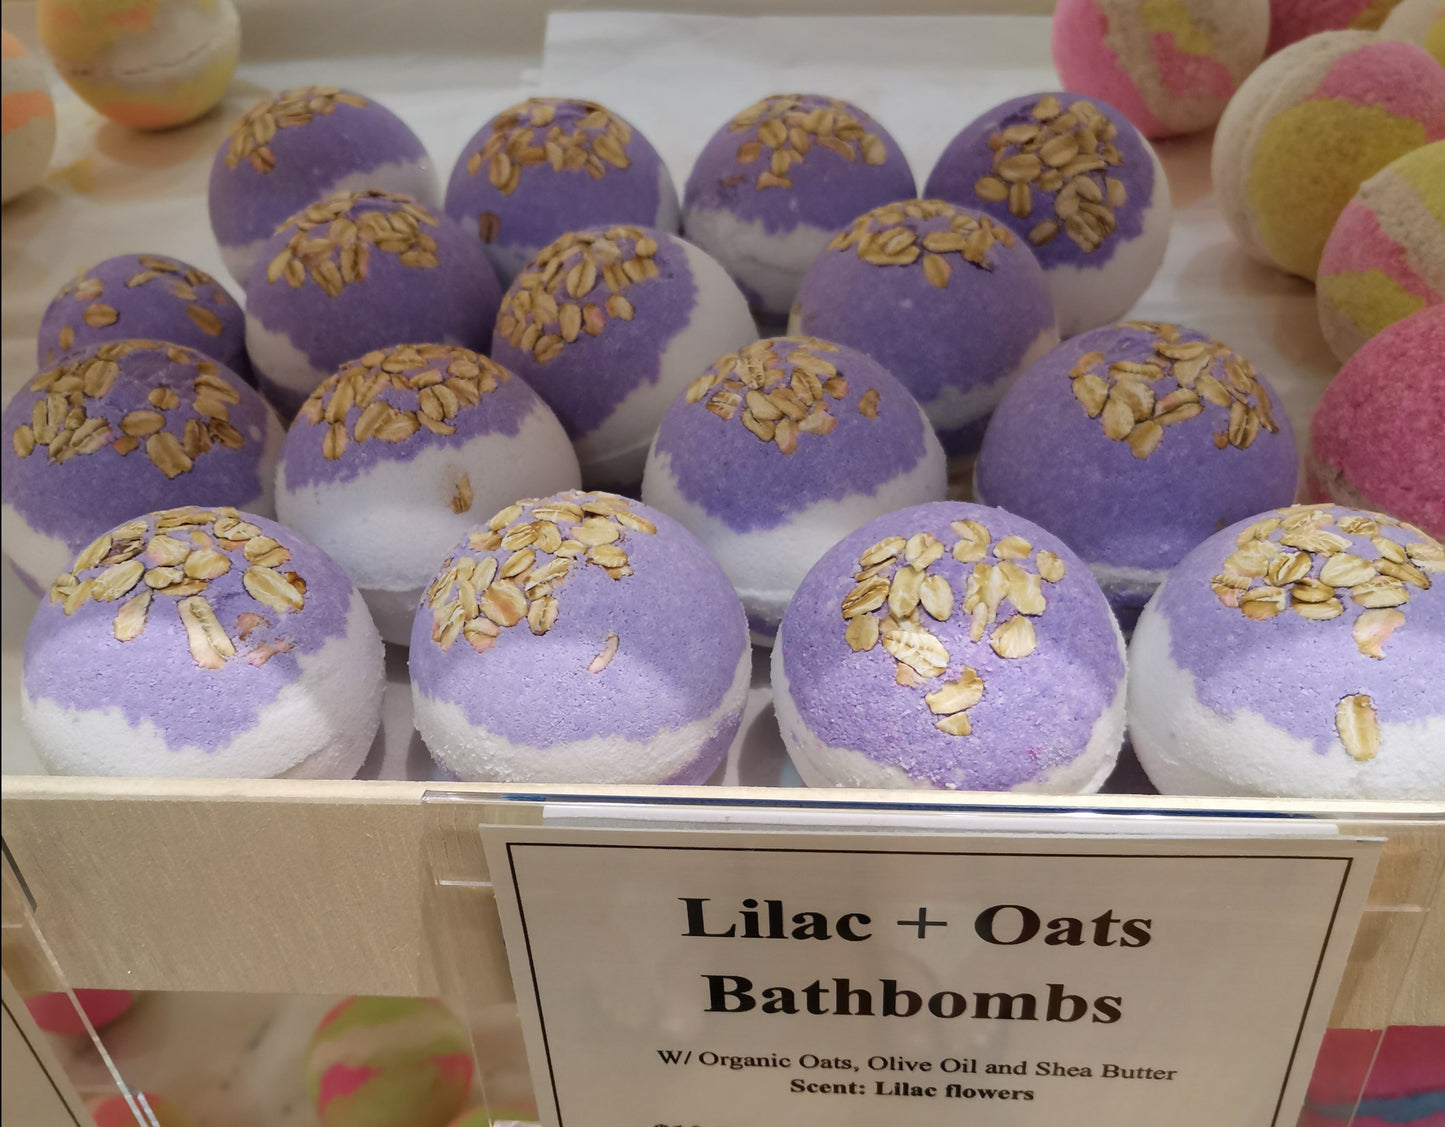 Lilac + Oats Bath Bombs